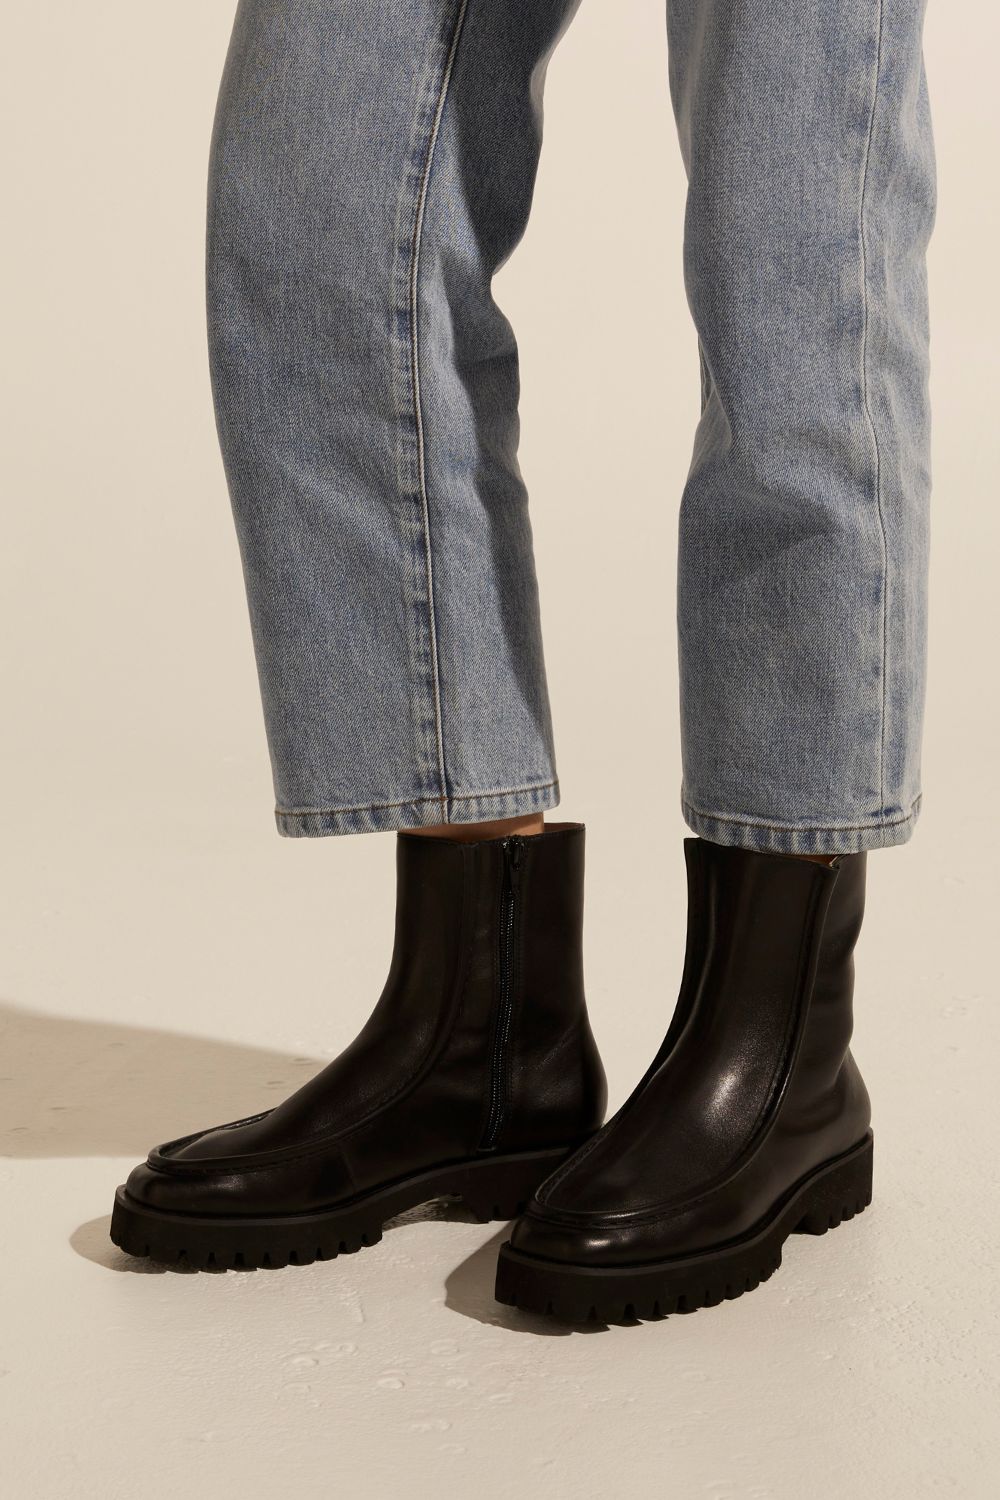 Notion boot - black